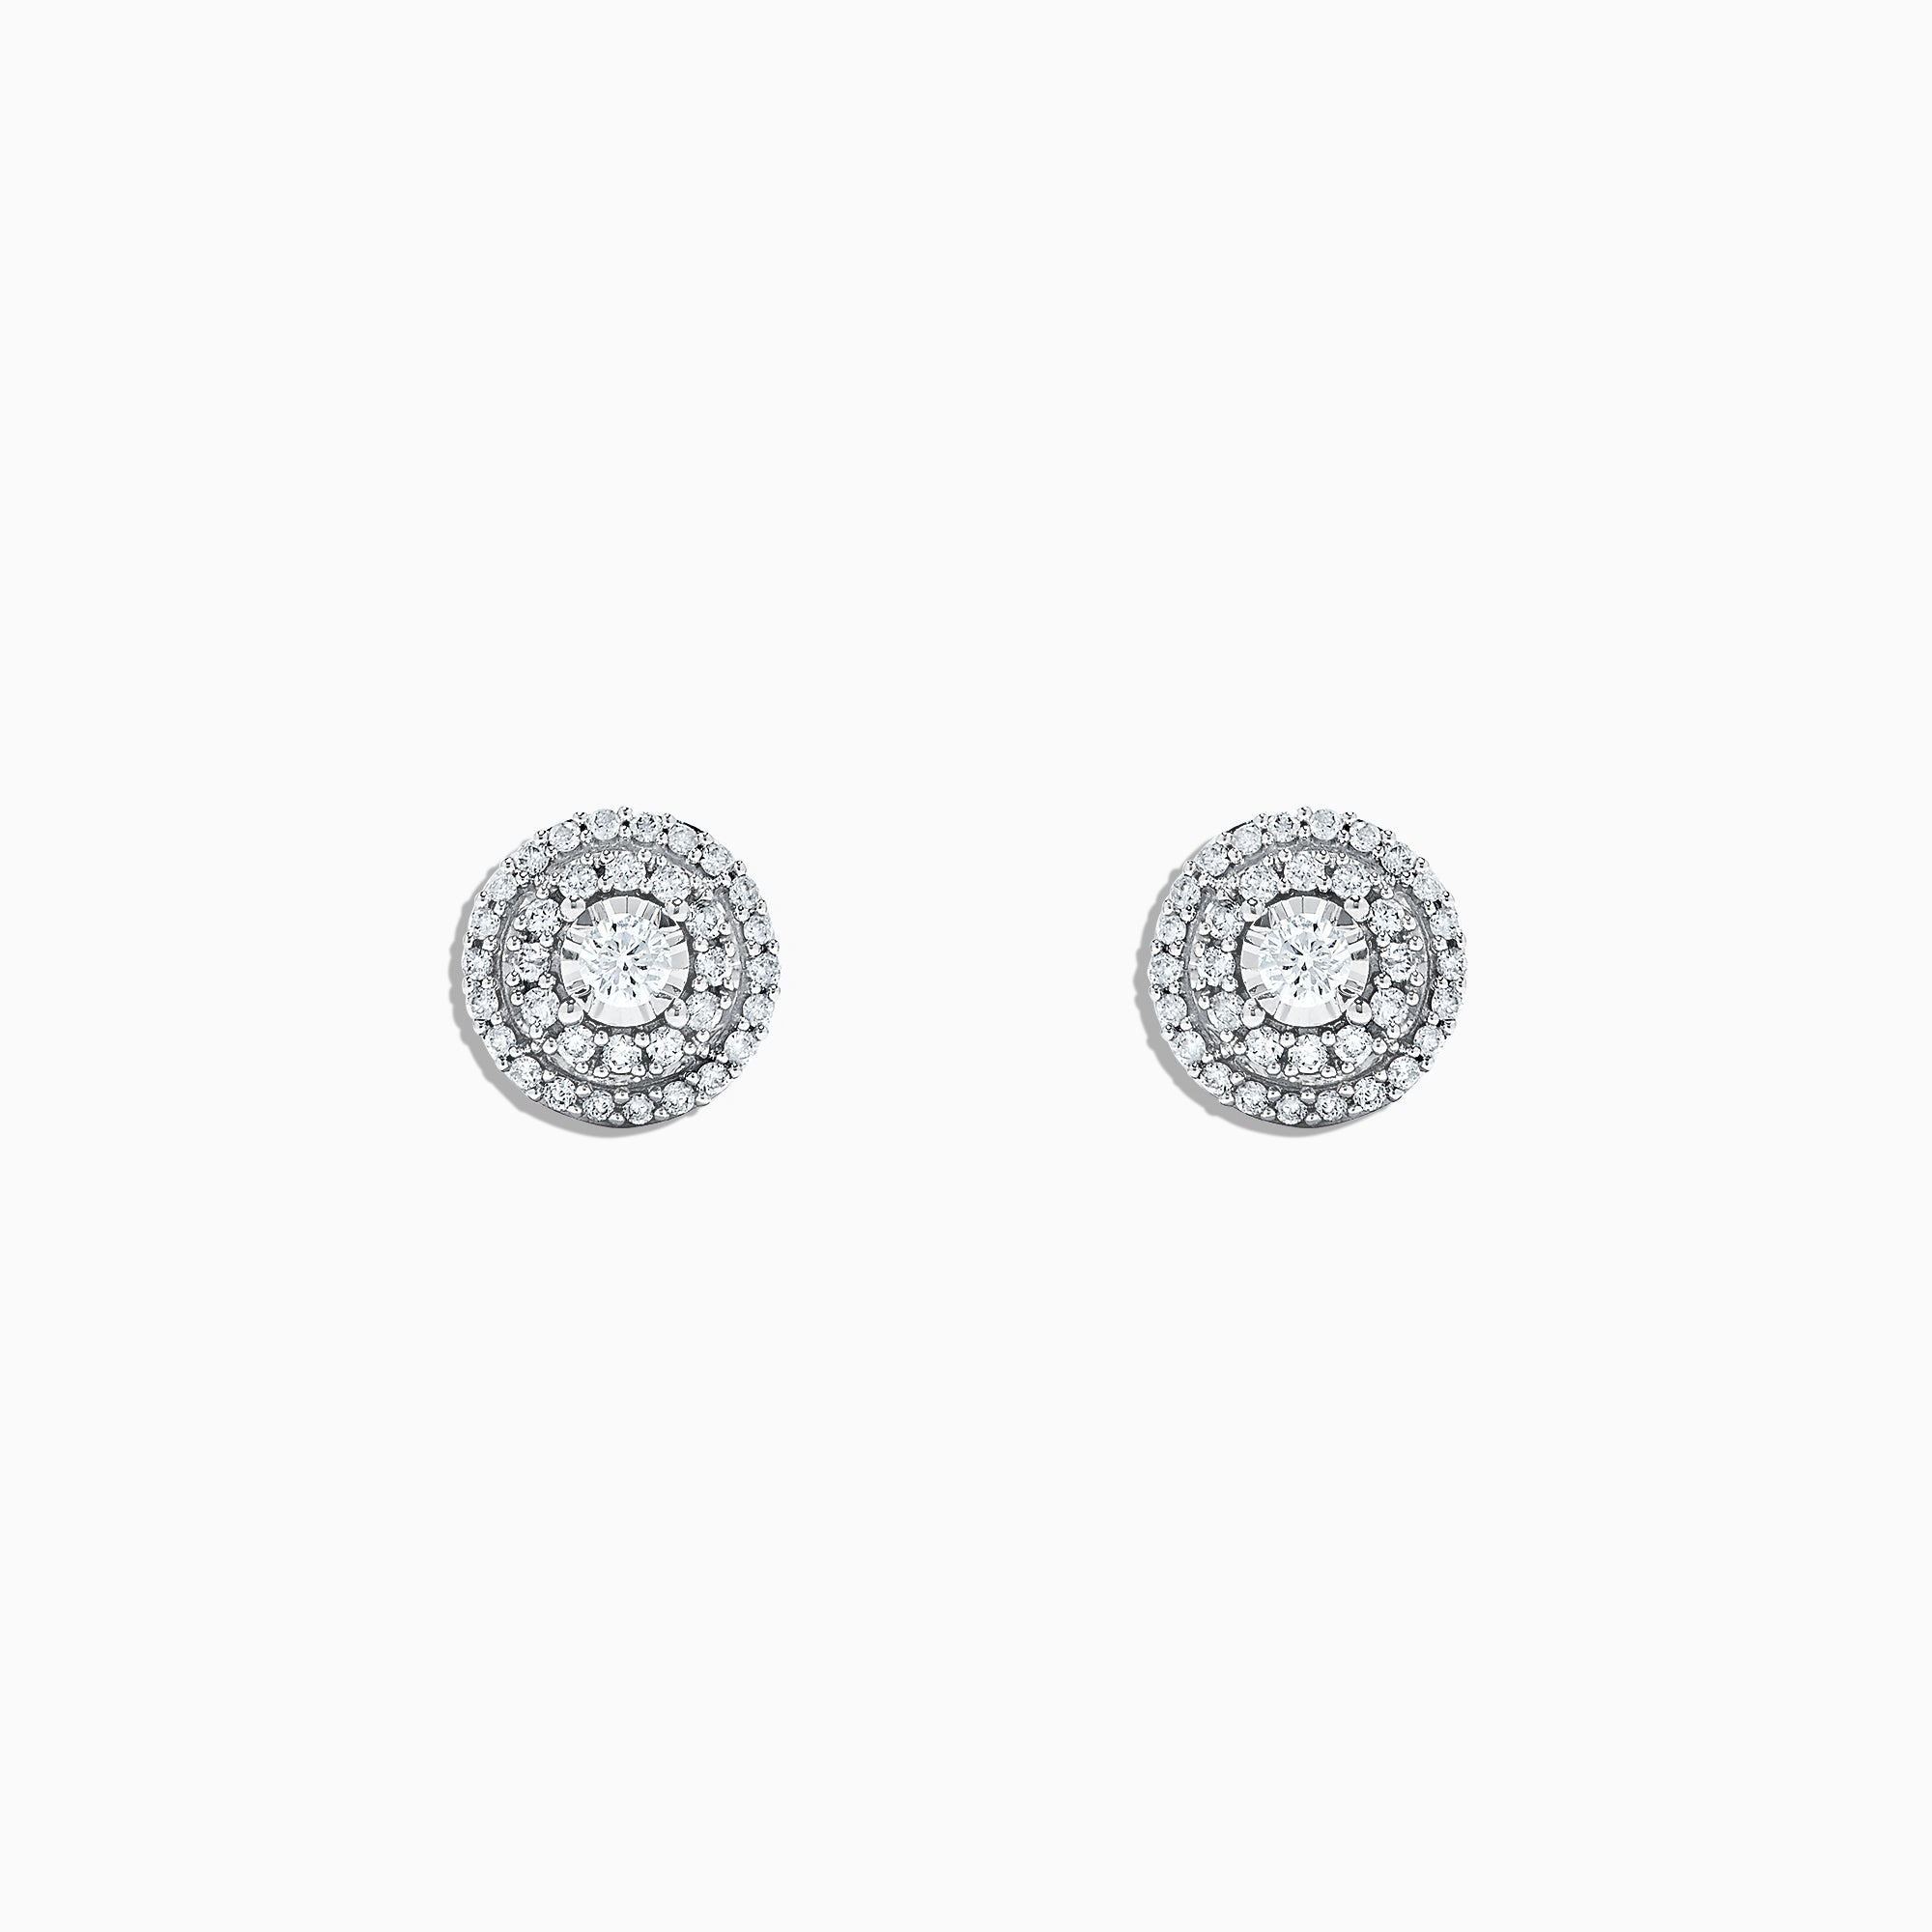 Effy Pave Classica 14K White Gold Diamond Halo Stud Earrings, 0.49 TCW